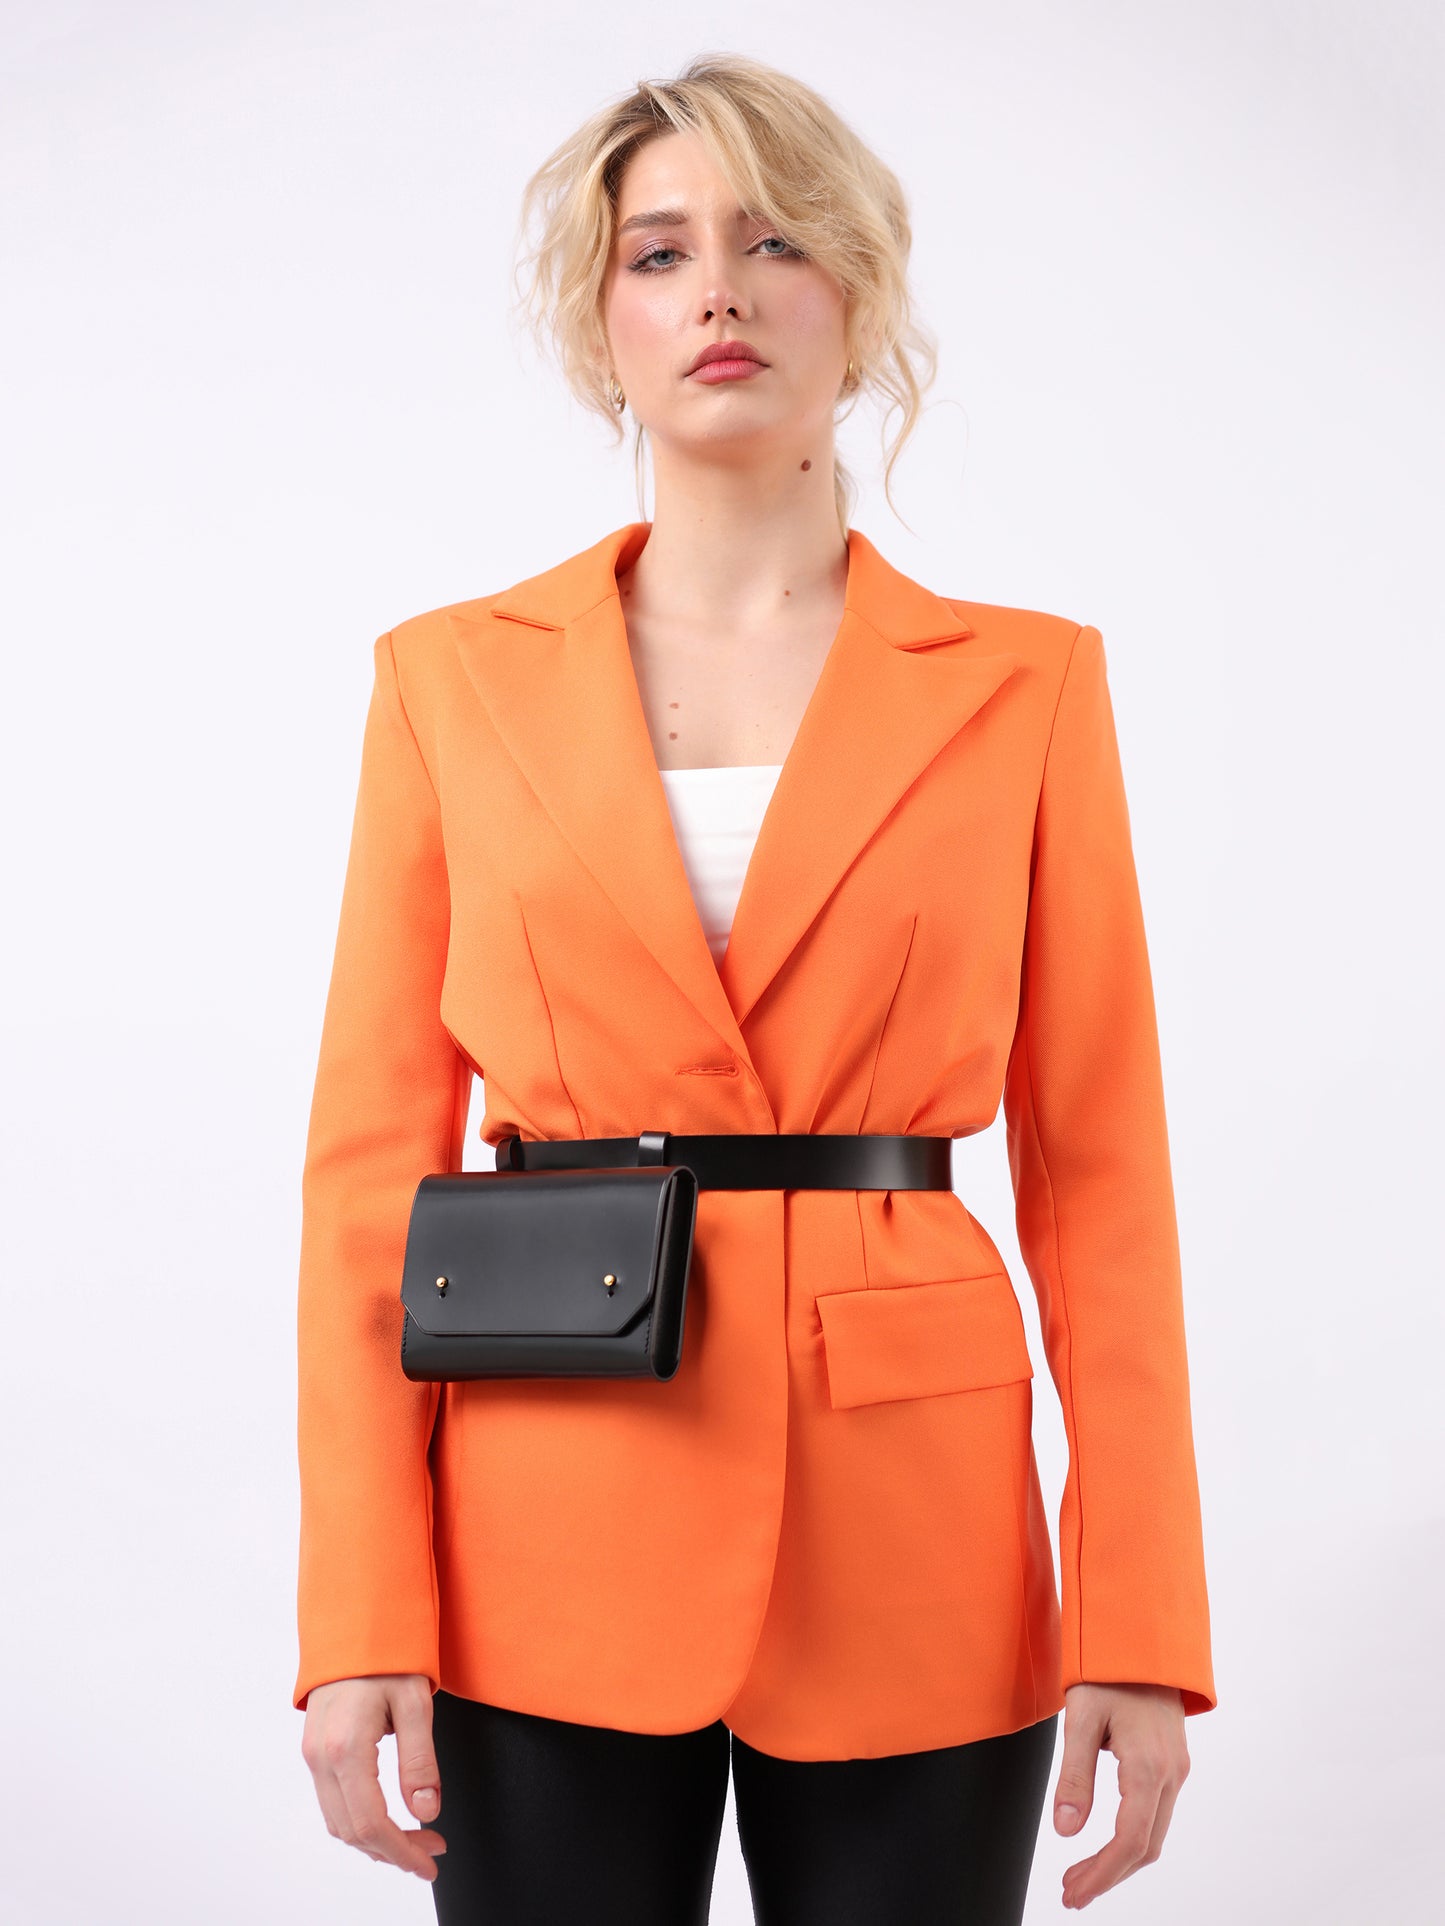 Blac envelope belt bag fitted on woman wearing orange blazer.